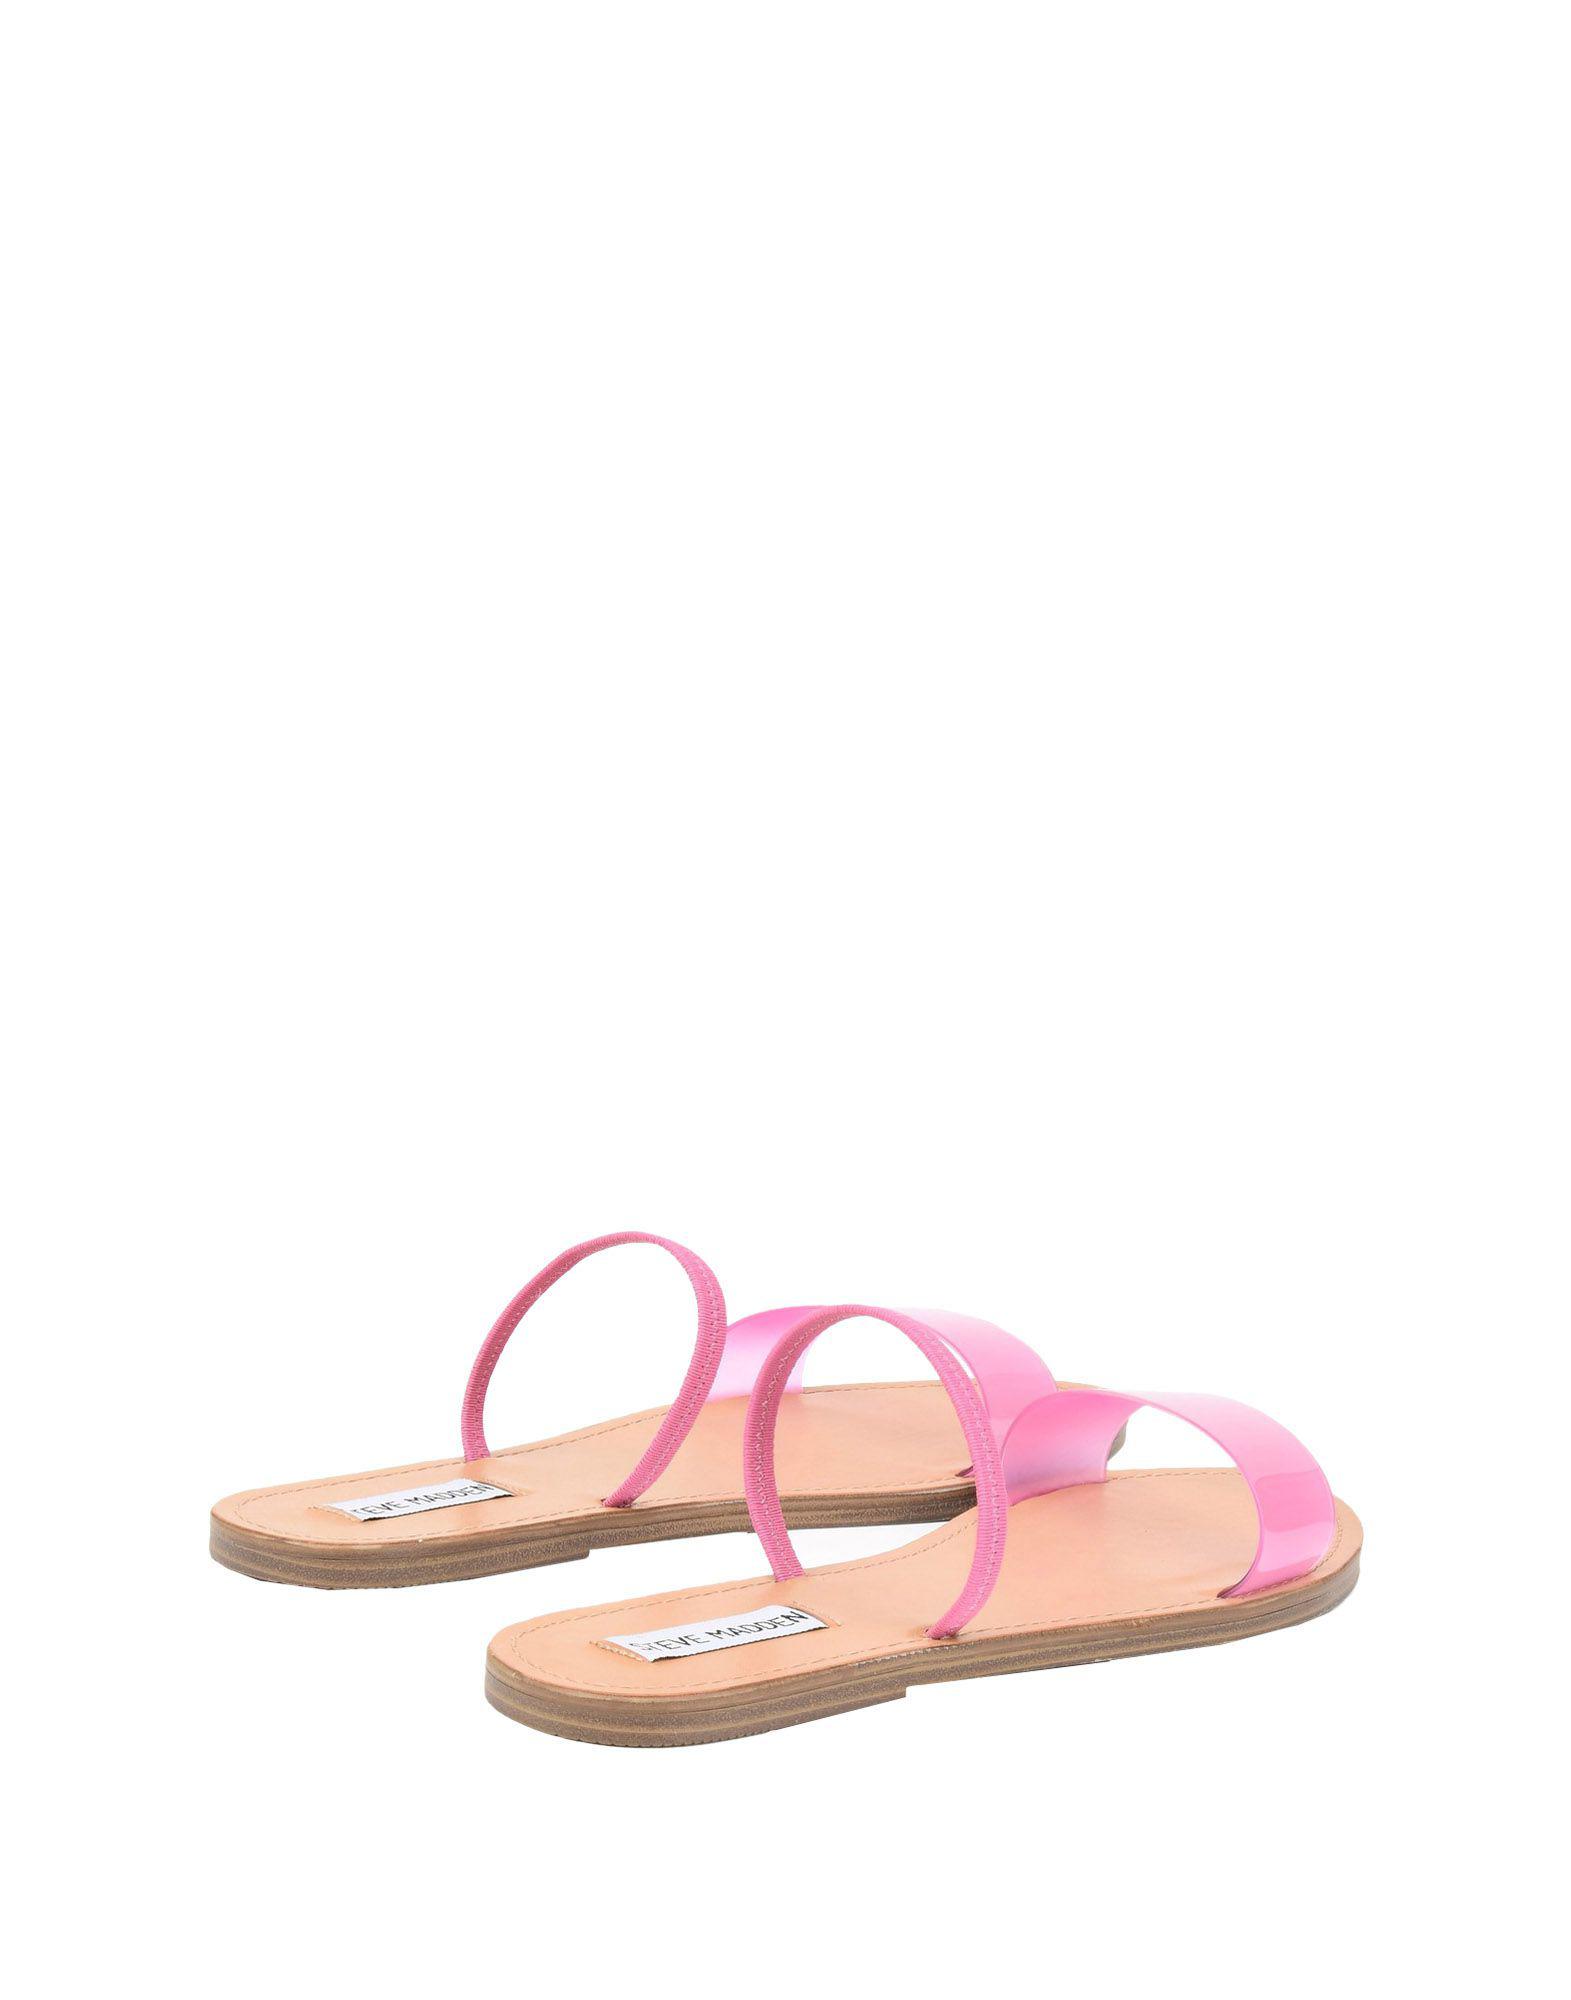 Steve Madden Rubber Sandals in Pink - Lyst